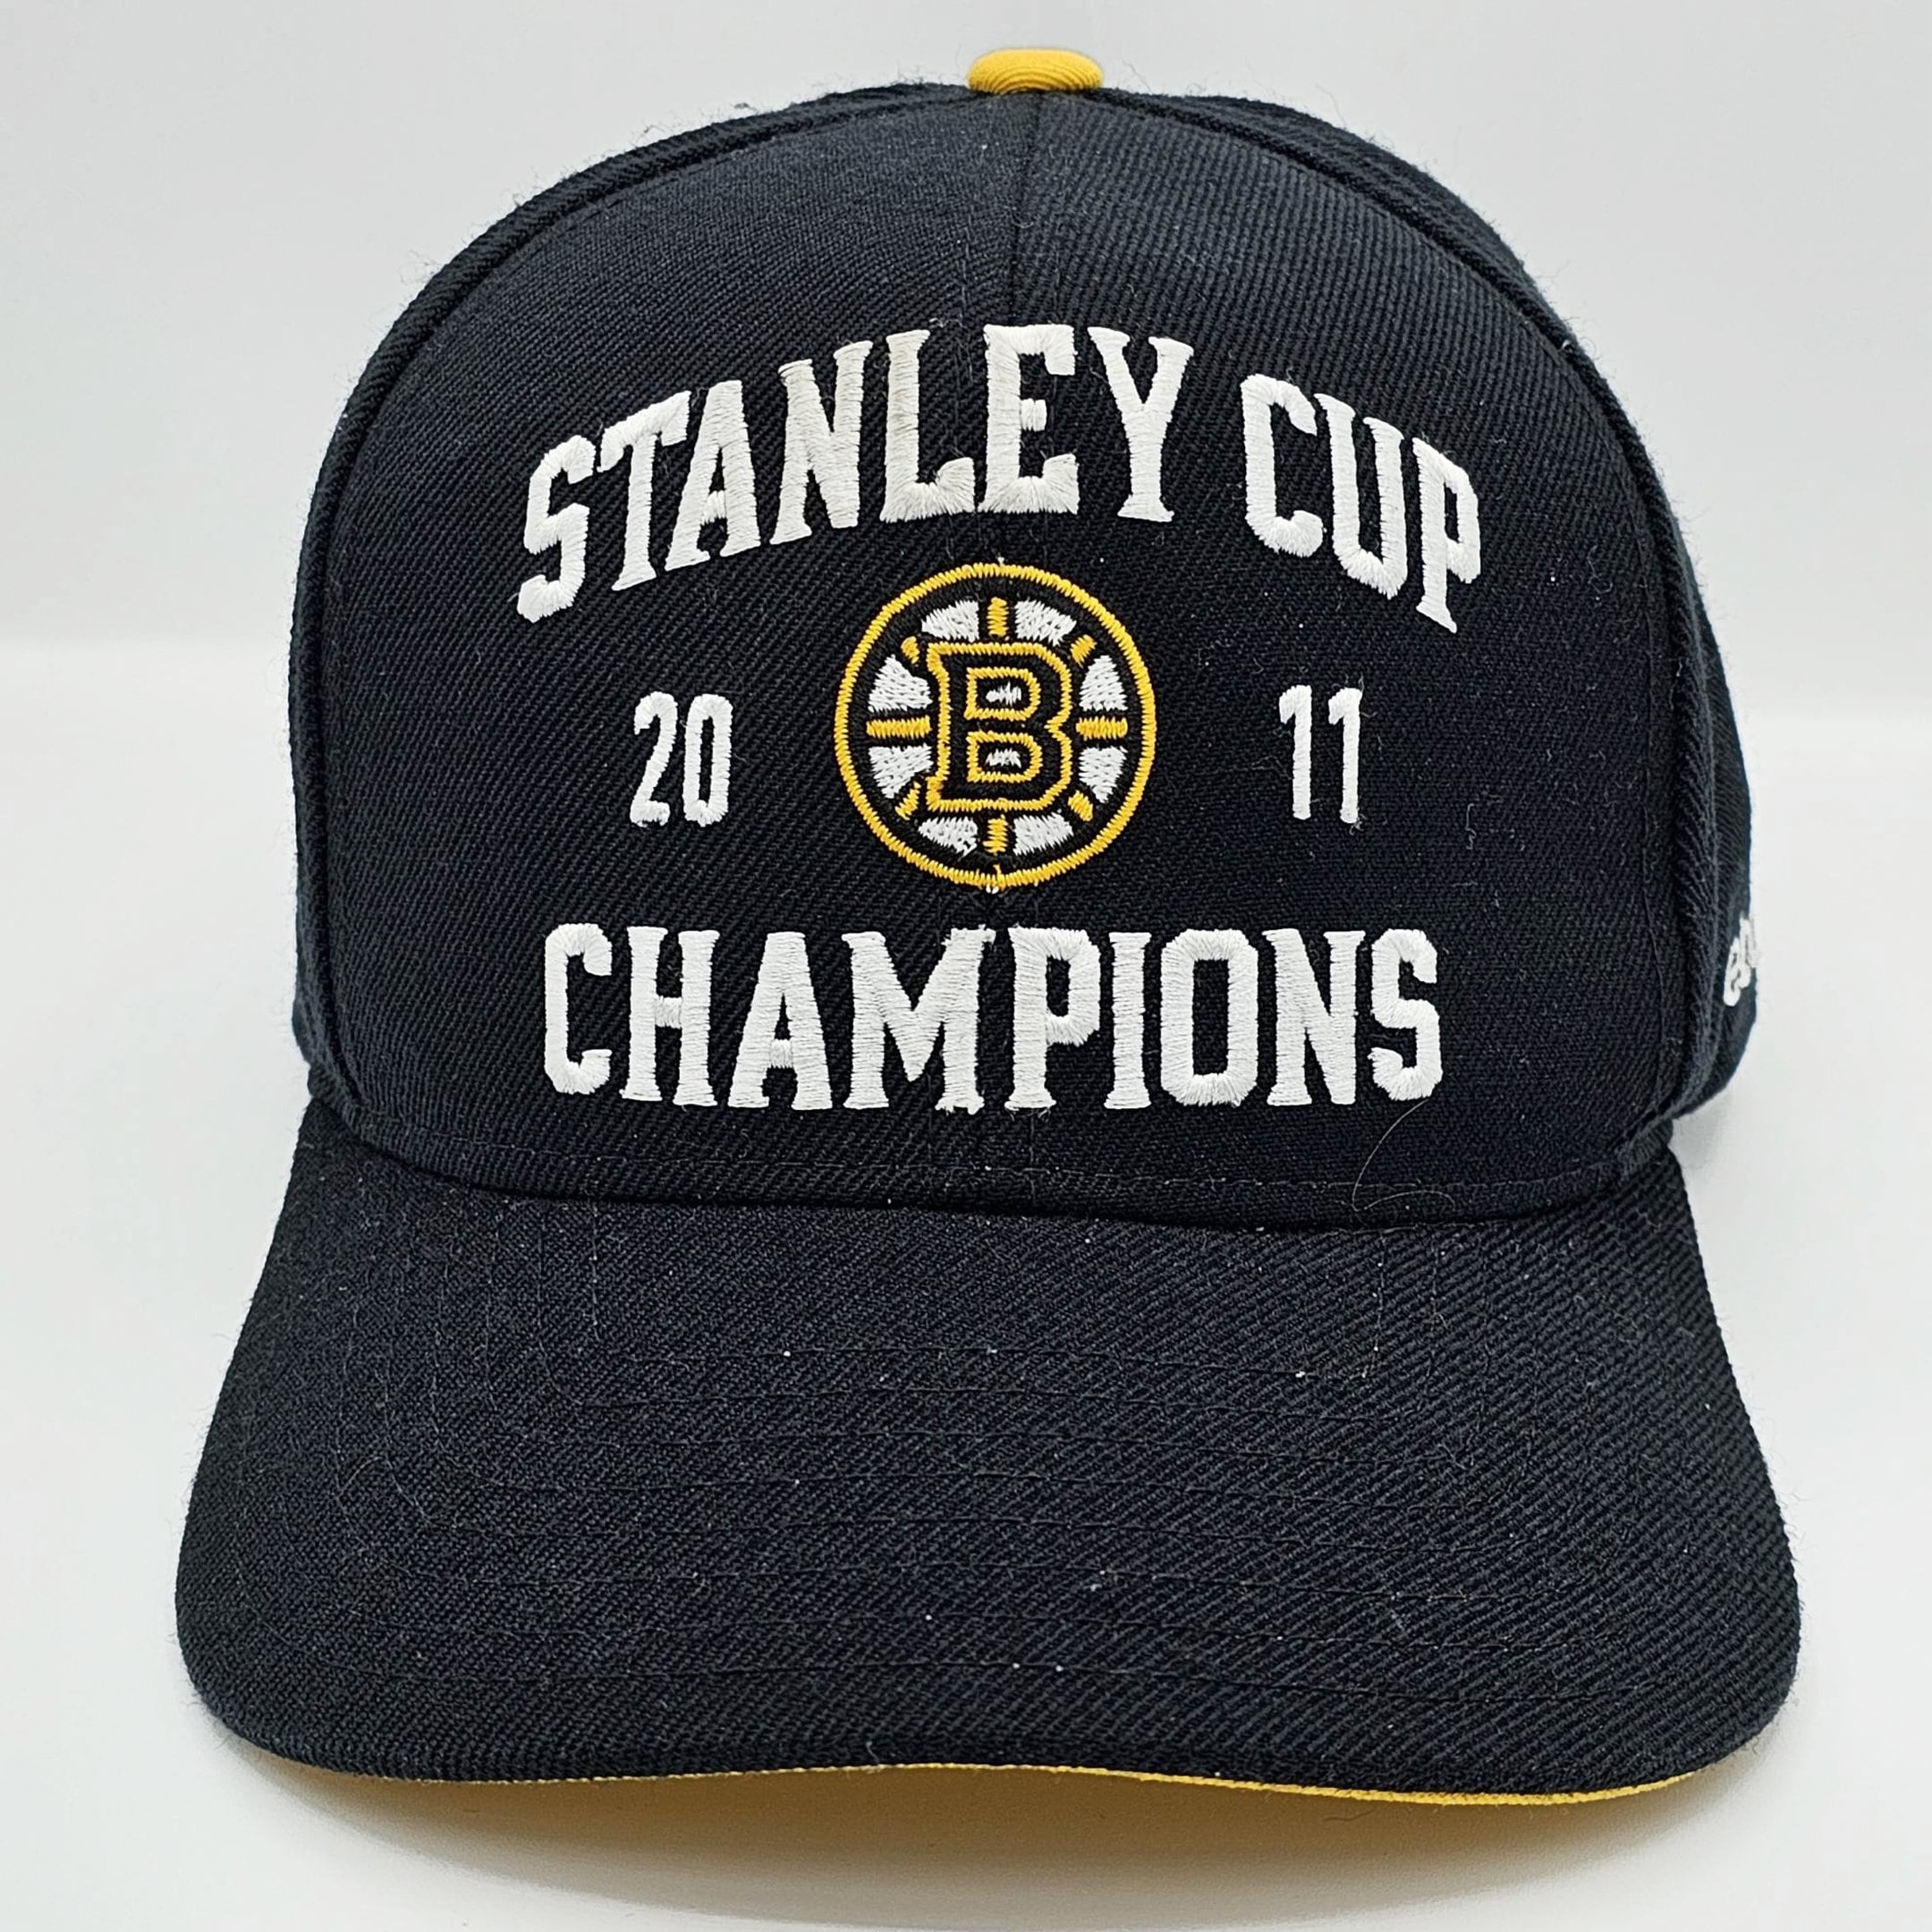 Reebok 2011 Boston Bruins Stanley Cup Champions Hat